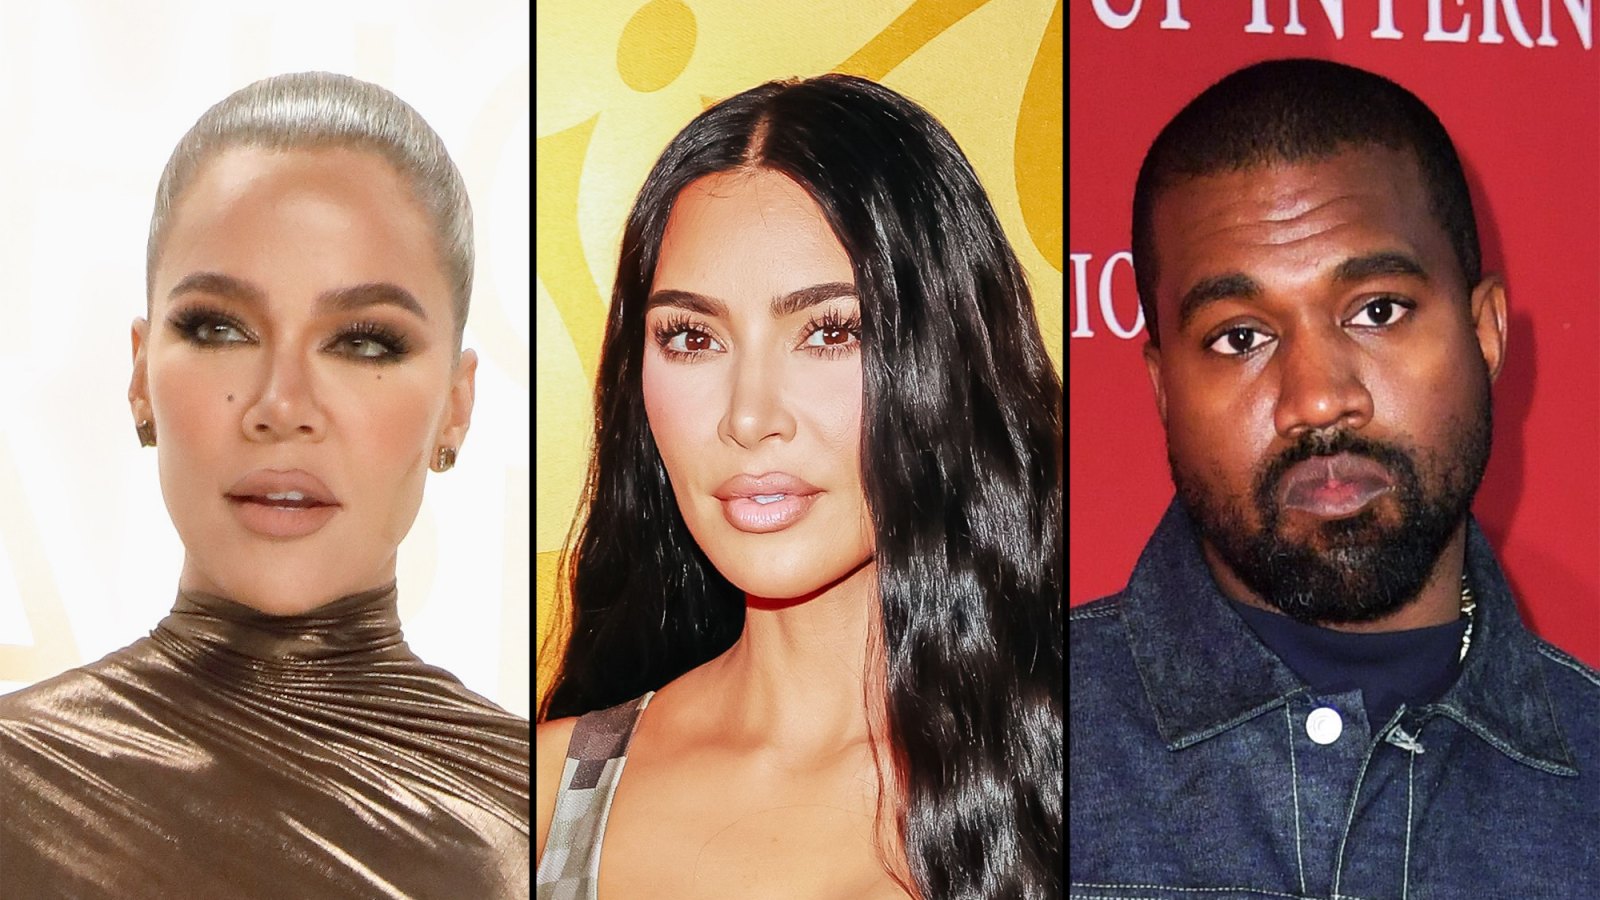 Kim Kardashian and Khloé Kardashian have responded to Kanye West’s “gravely irresponsible” antisemitic comments following public backlash.